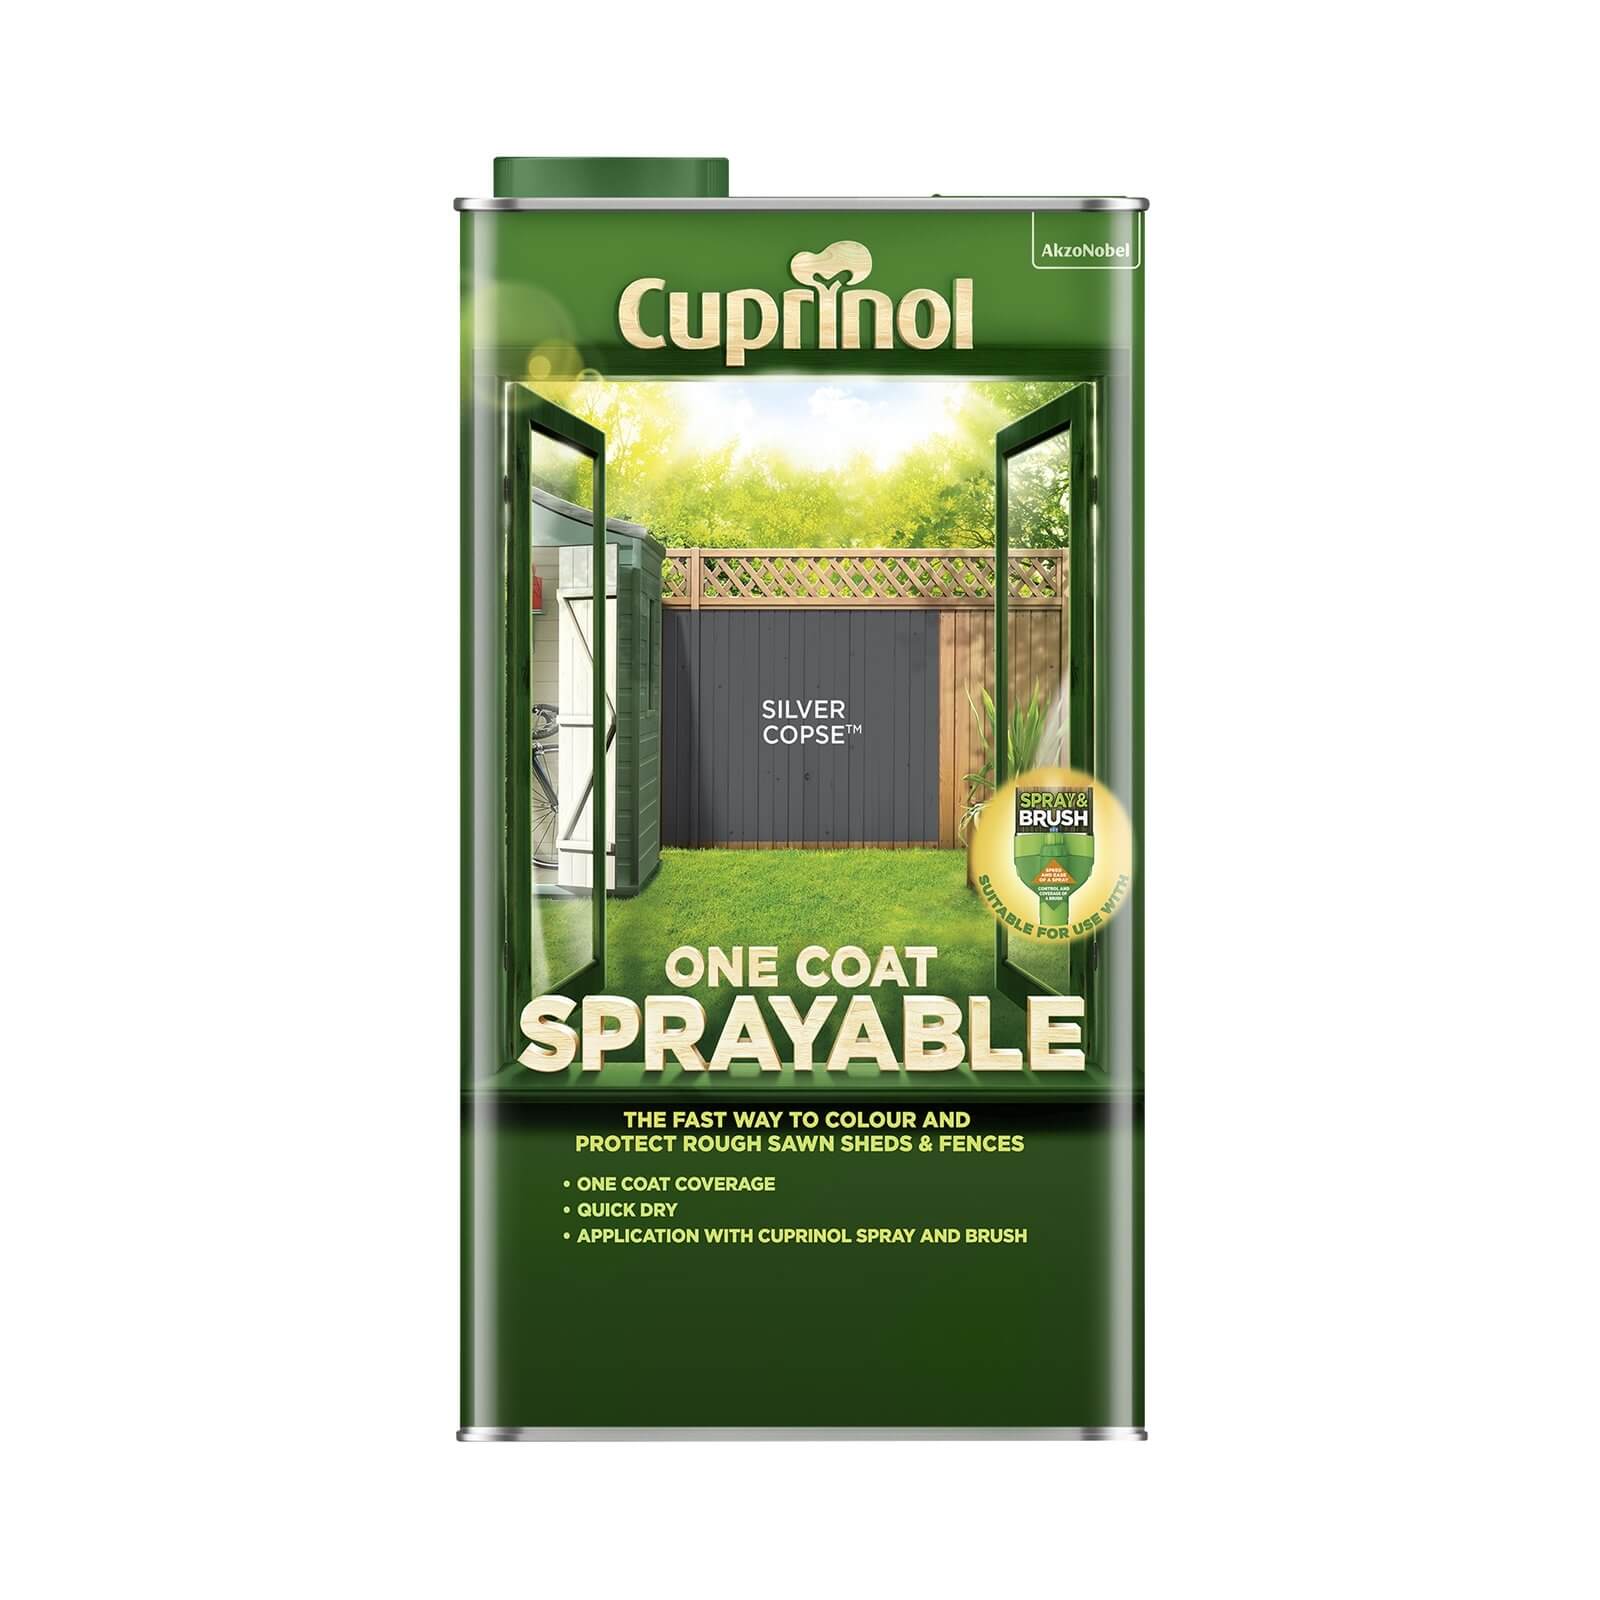 Cuprinol One Coat Sprayable Shed & Fence Paint Paint Silver Copse - 5L